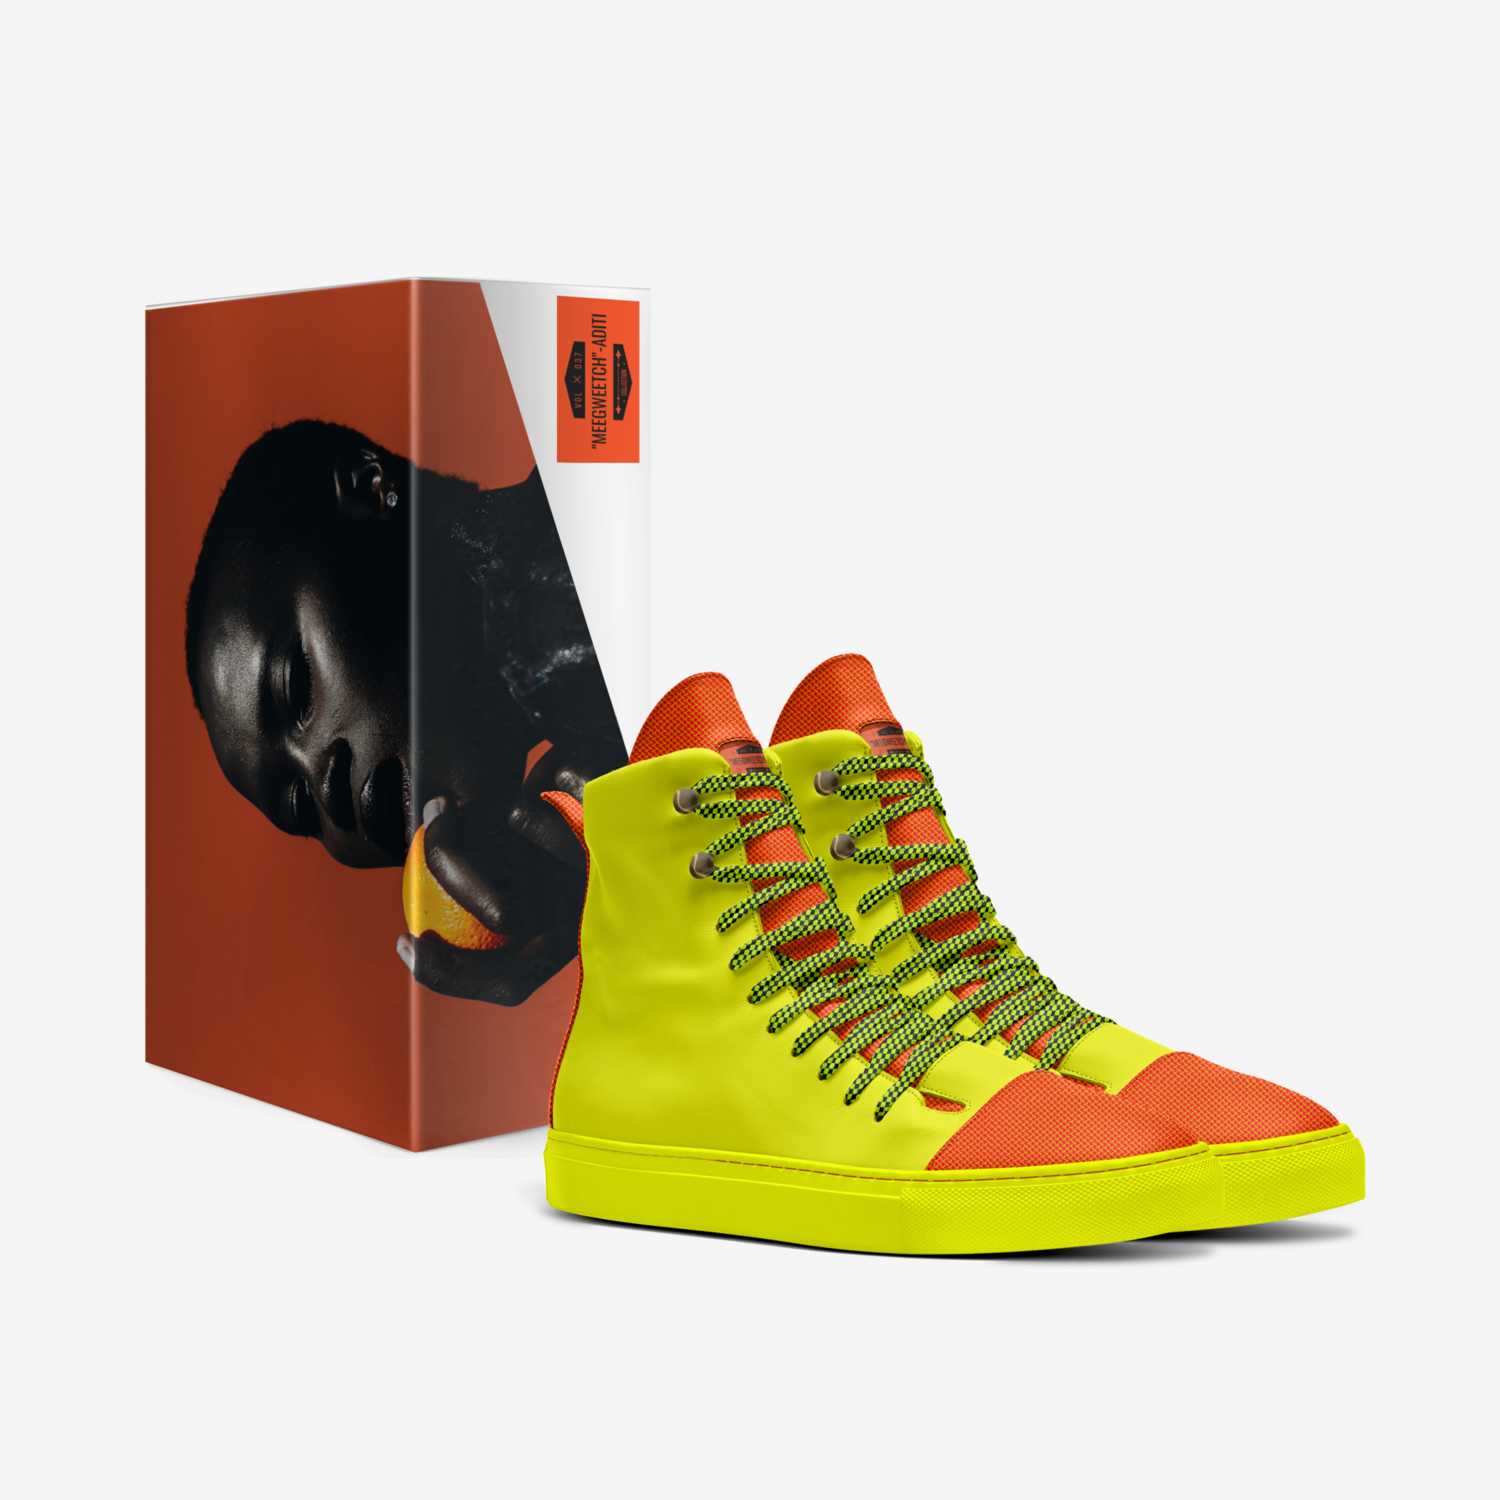 meegweetch custom made in Italy shoes by Aditi-kali Of Wonkey Donkey Bazaar | Box view